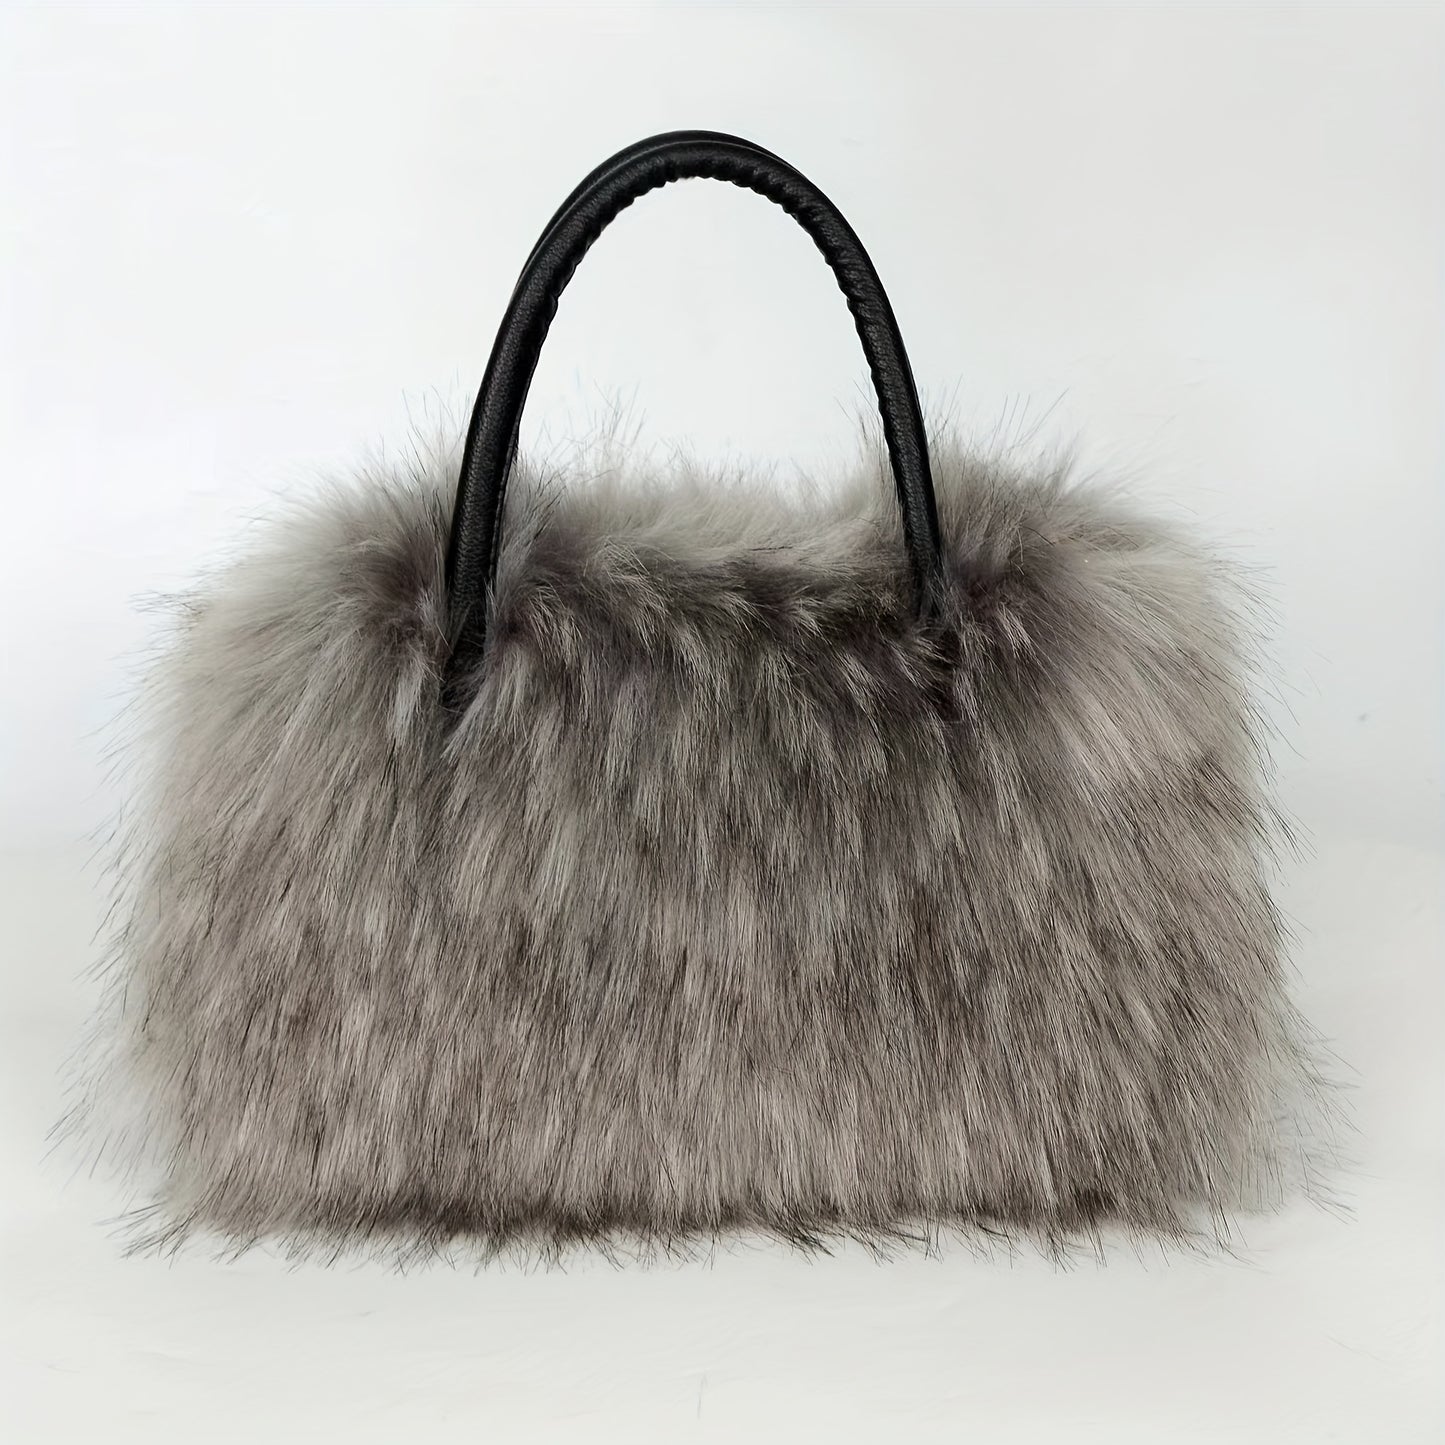 Trendy Faux Fur Tote Bag - Y2K Plush Fluffy Shoulder Handbag for Street Wear